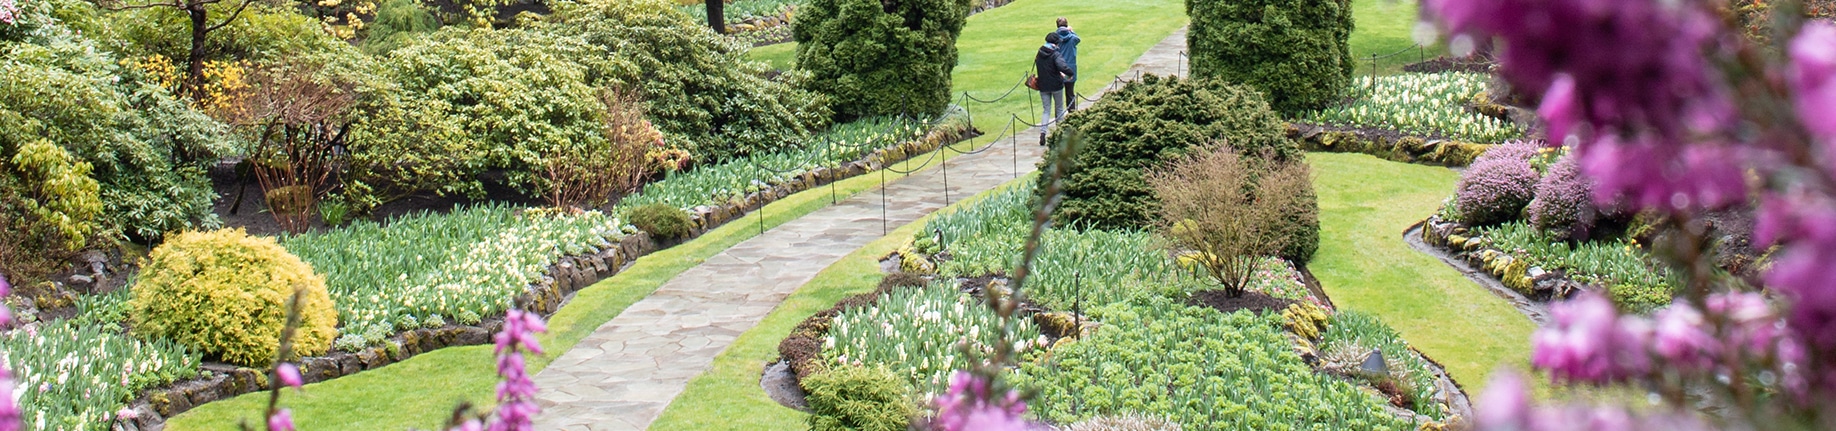 People walking along path in The Butchart Gardens Sunken Garden in the spring.